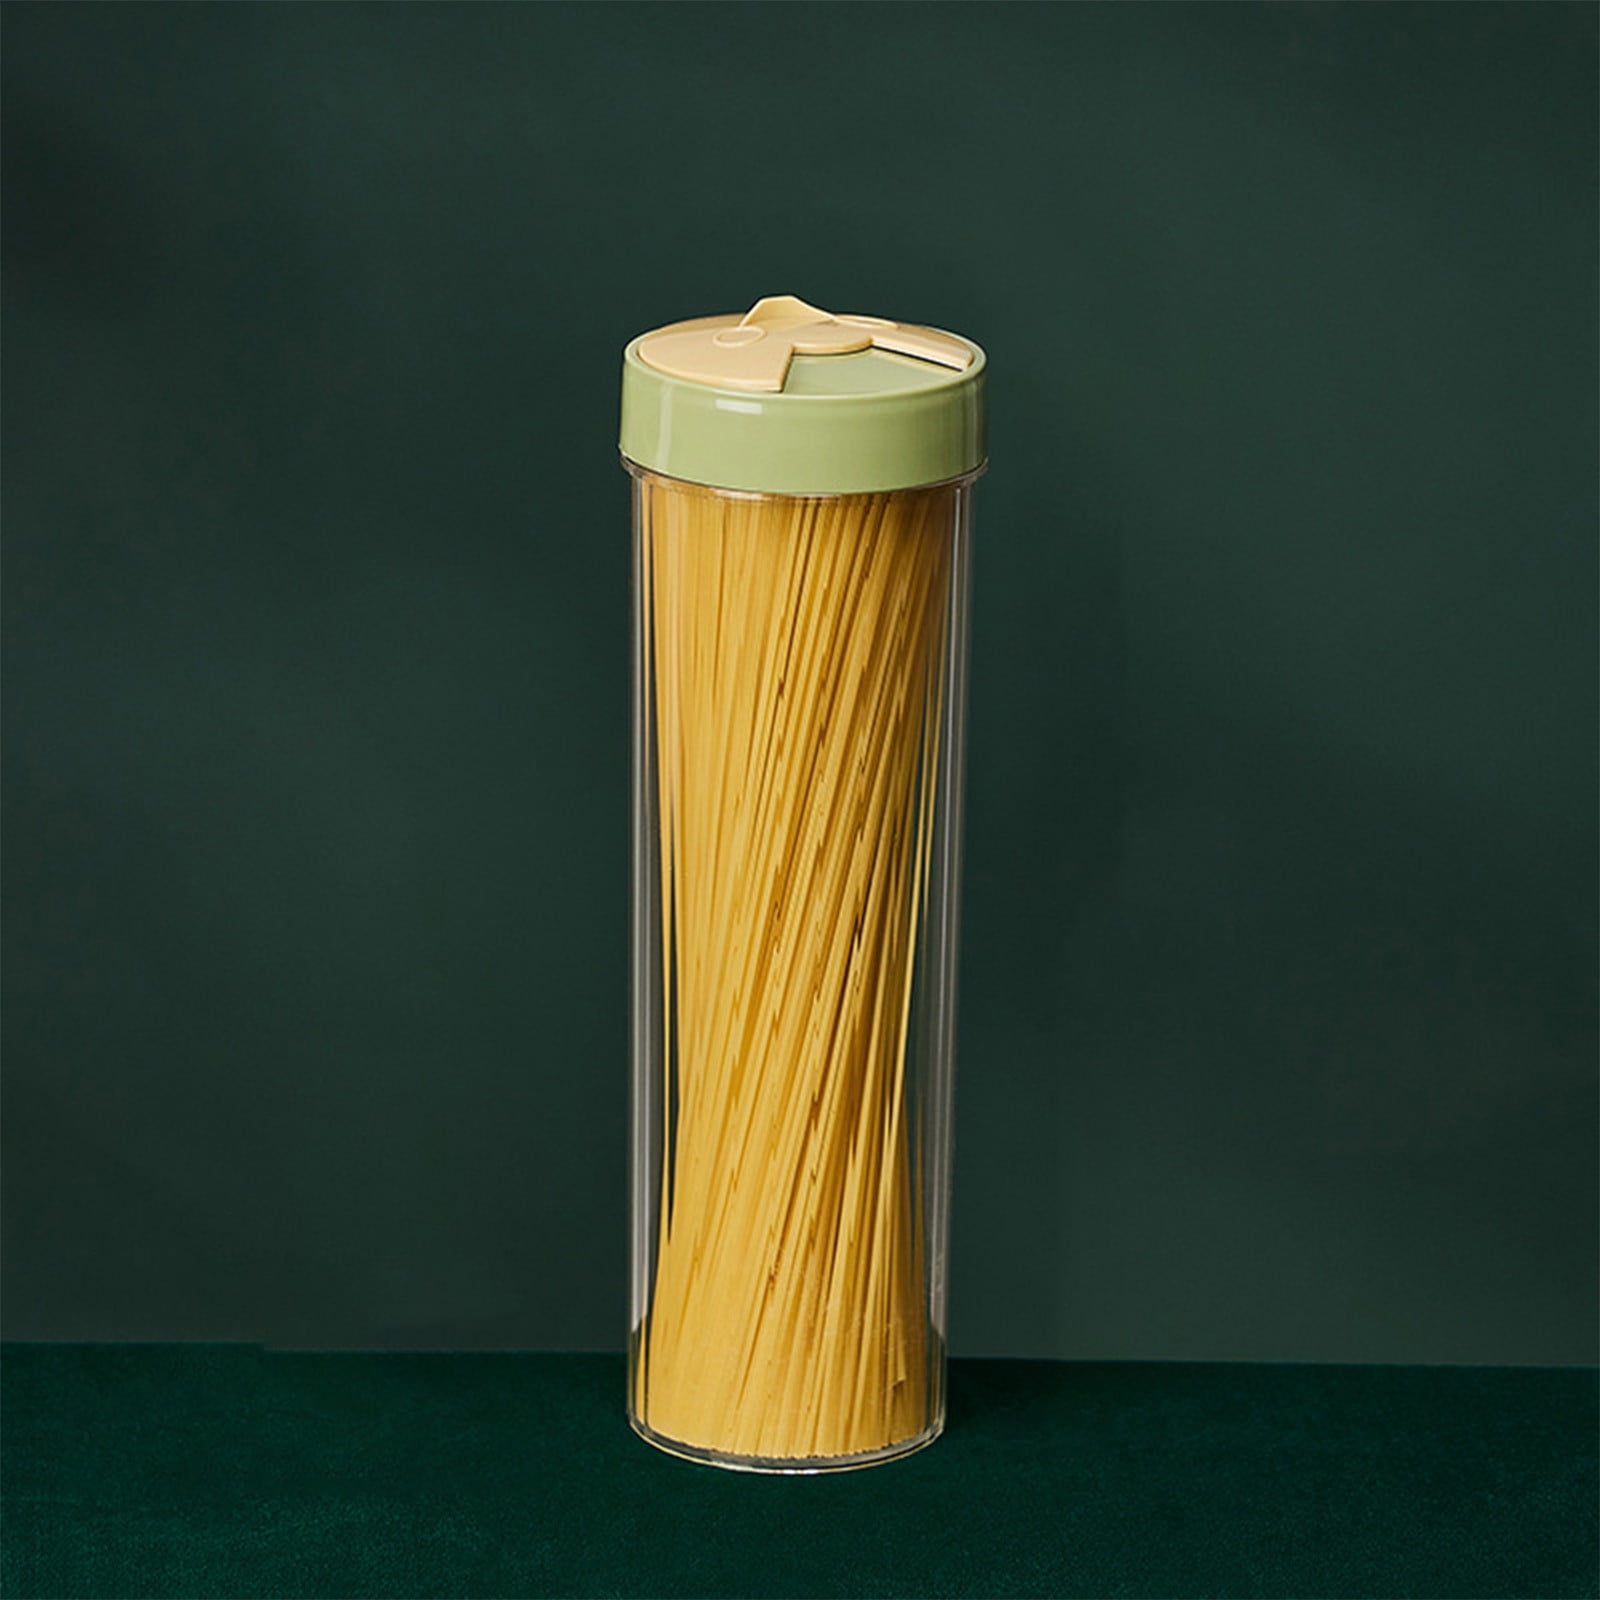 ZENS Glass Pasta Storage Containers, Airtight Tall Spaghetti Jars